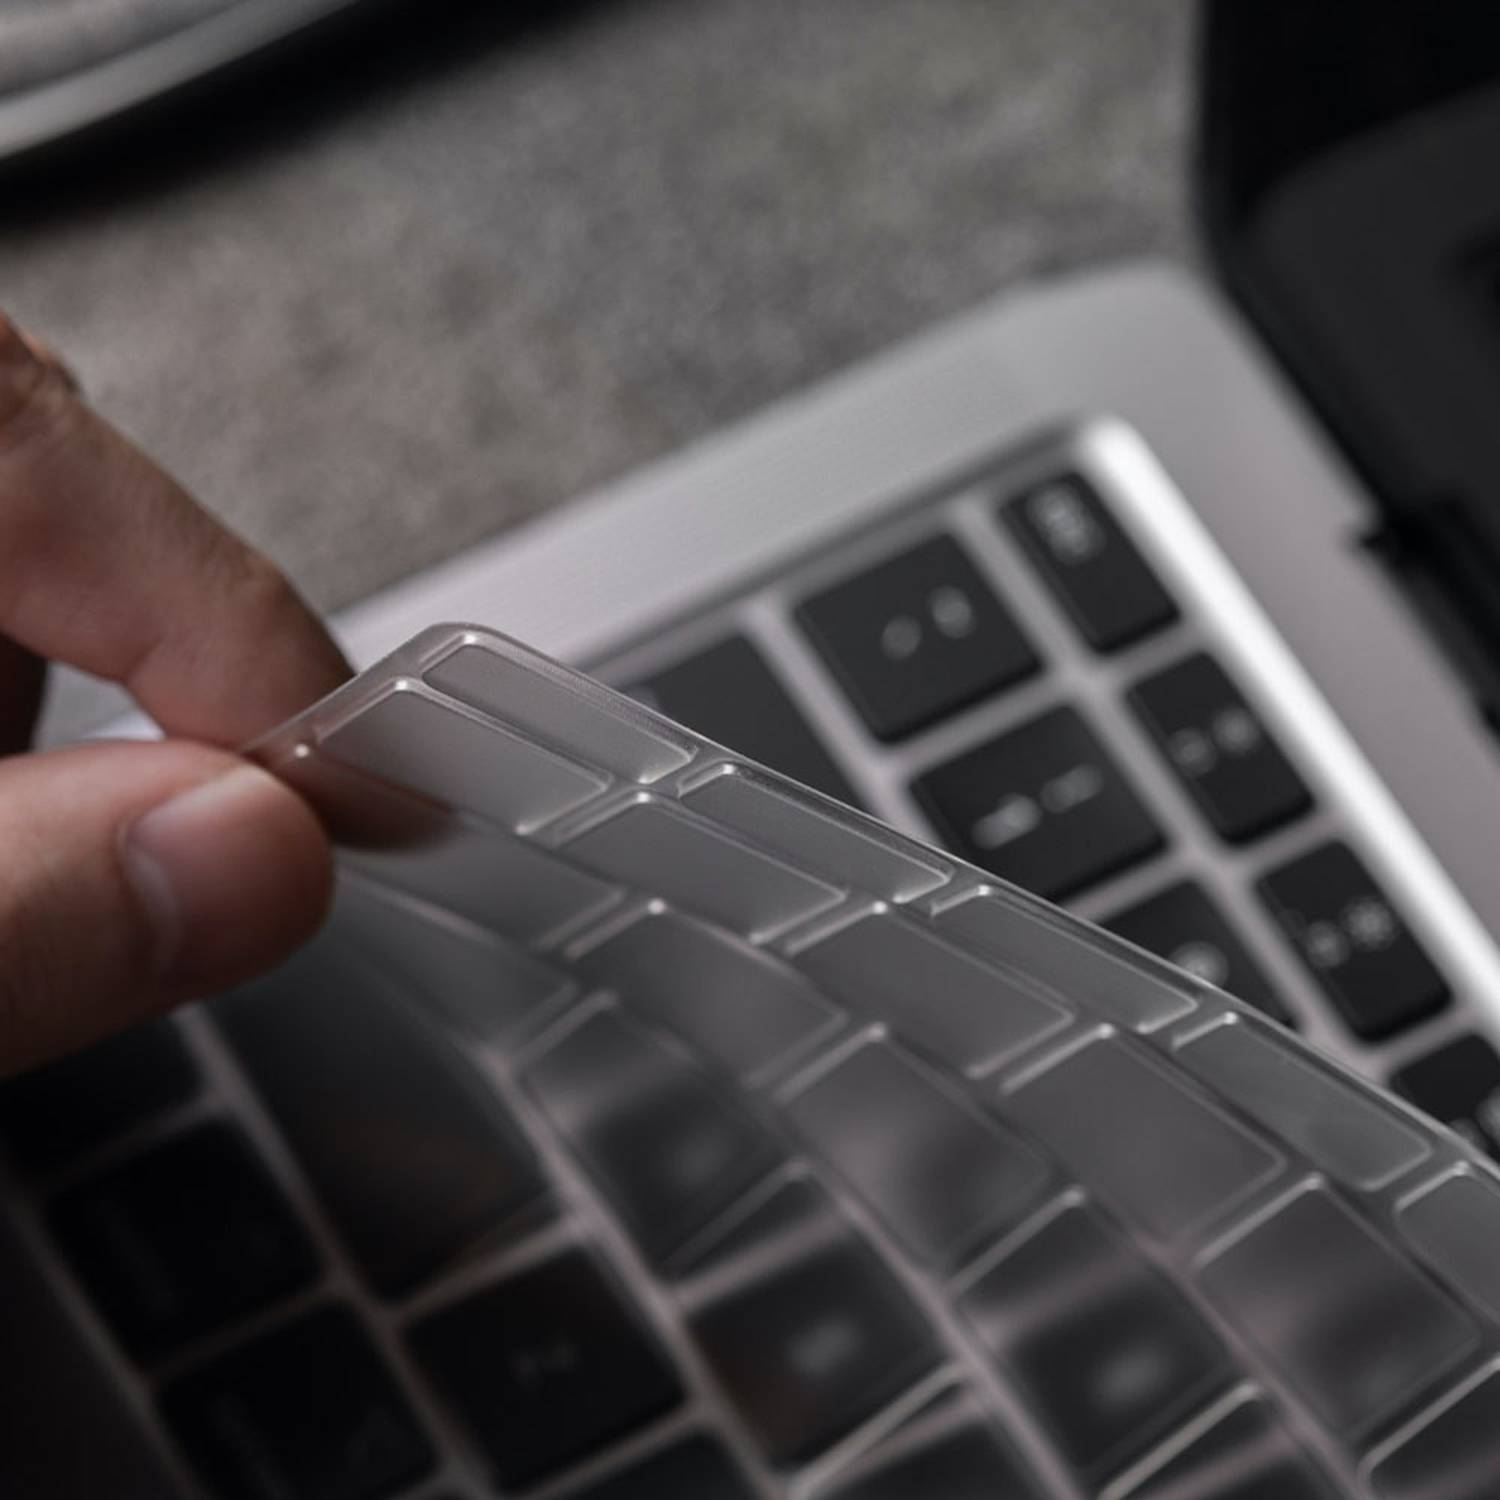 Moshi ClearGuard Keyboard Protector for MacBook Air 99MO021921